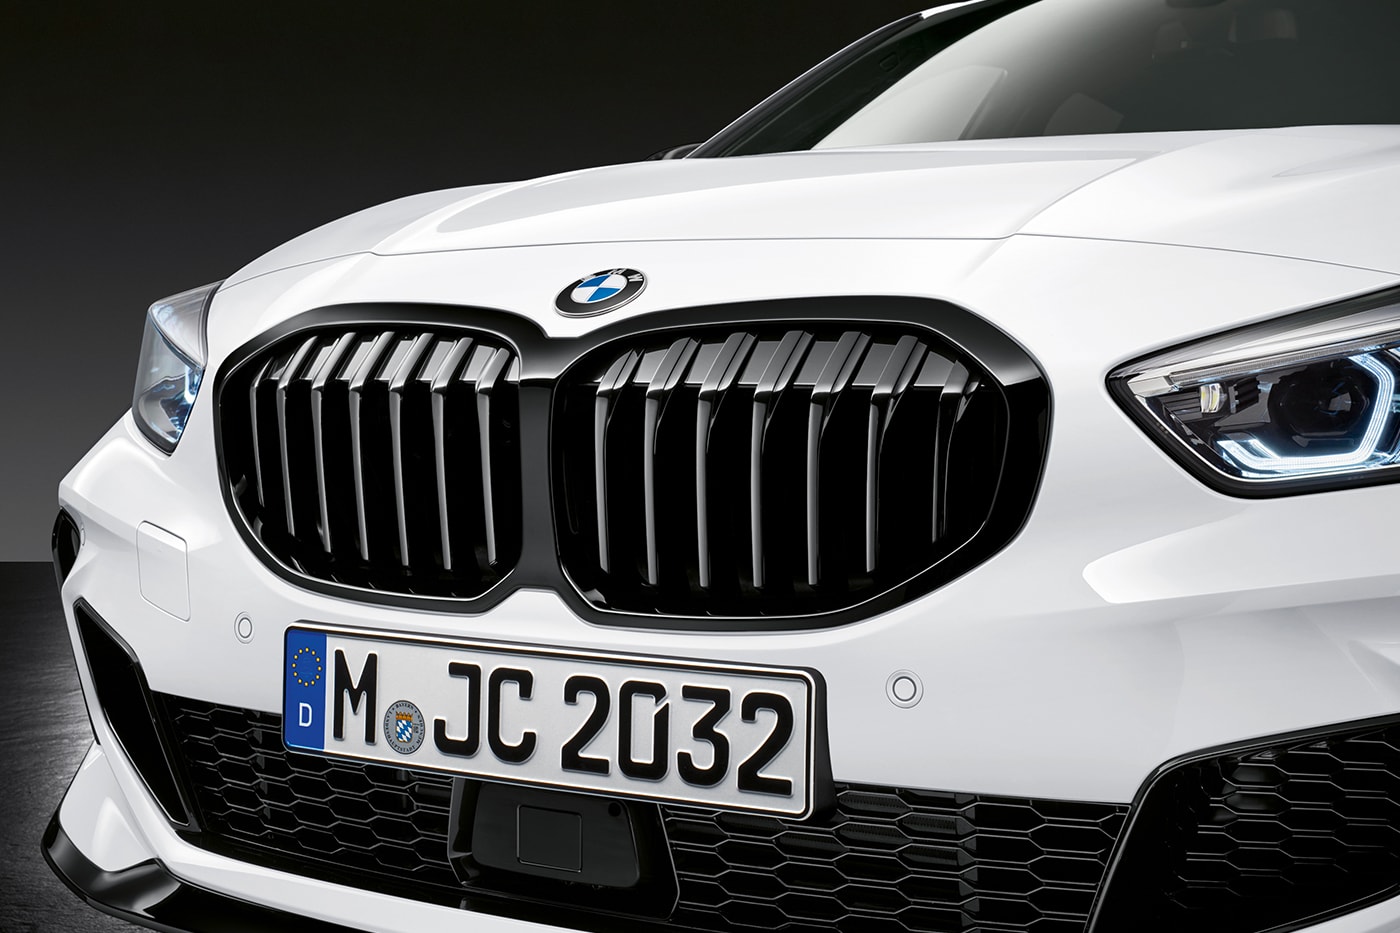 BMW Serie 1 2019. Ya cuenta con accesorios M Performance